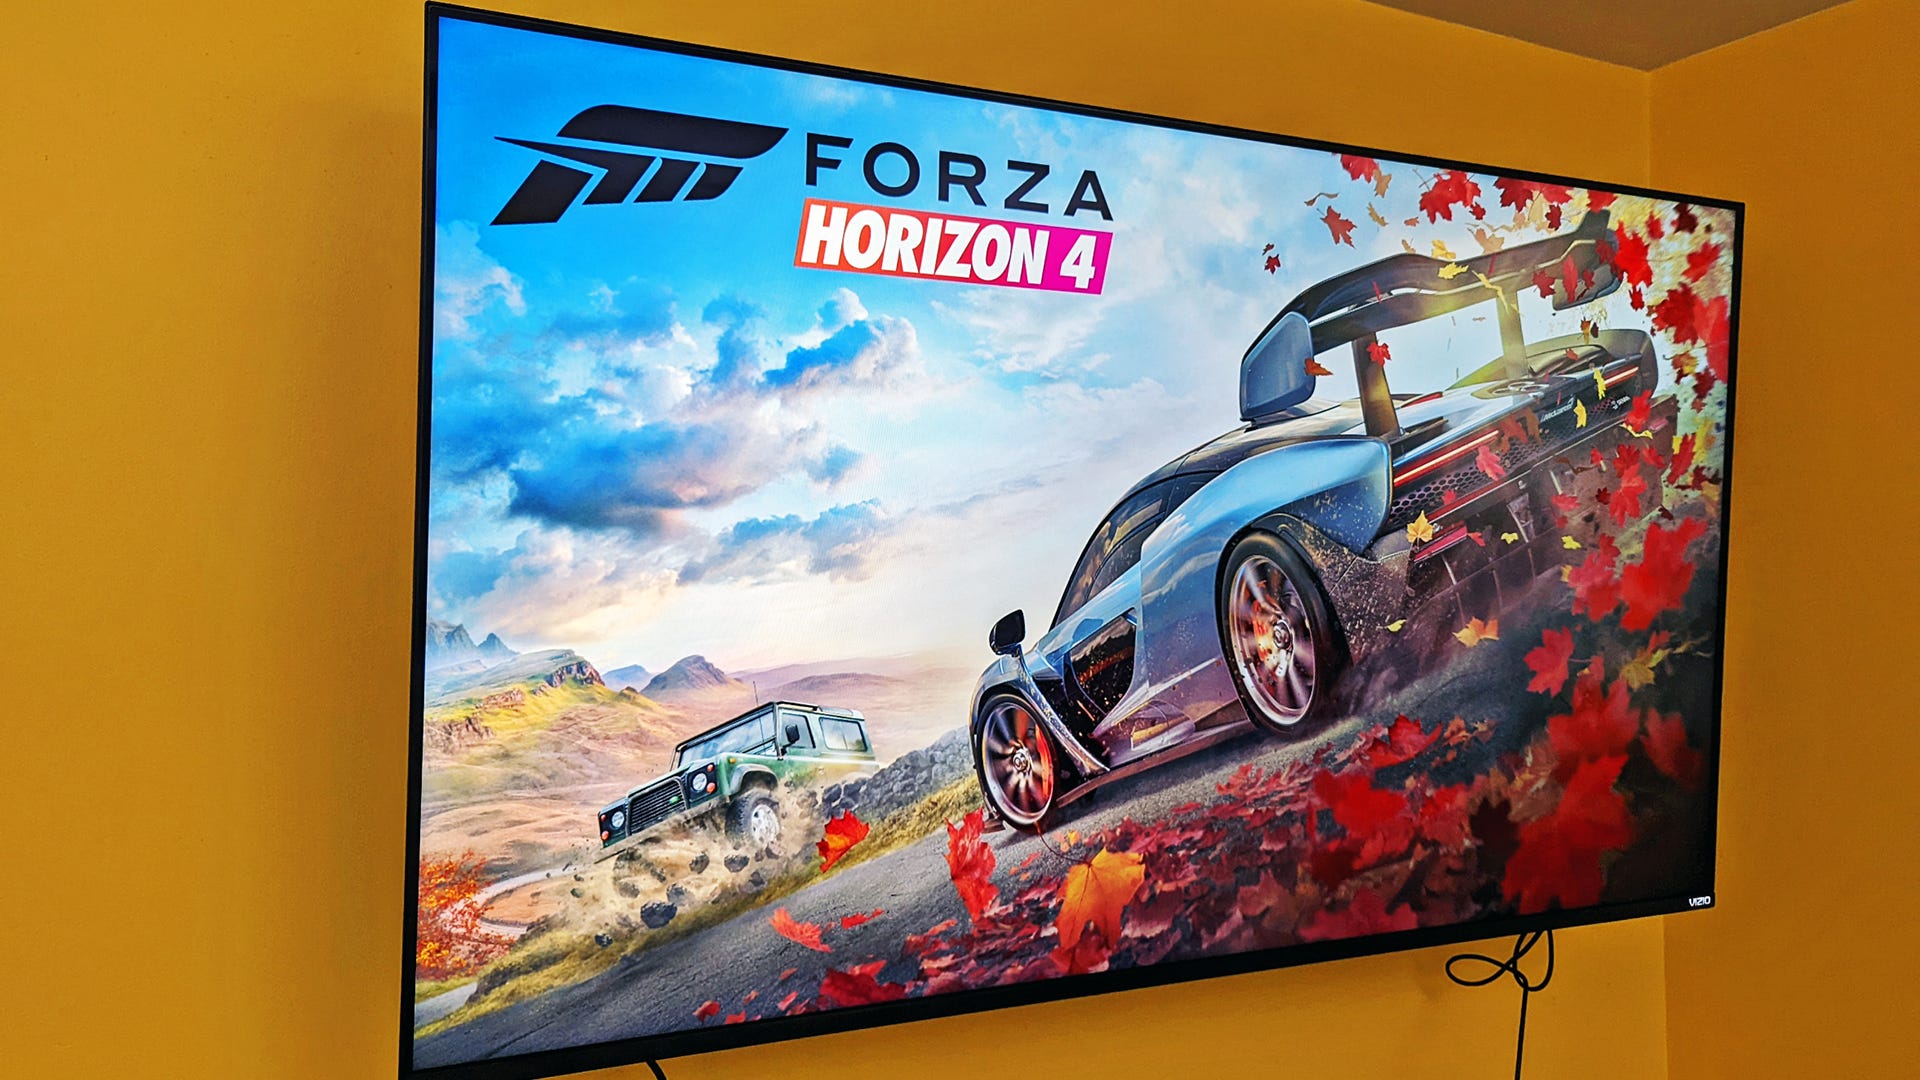 Vizio TV med Forza Horizon 4 på.